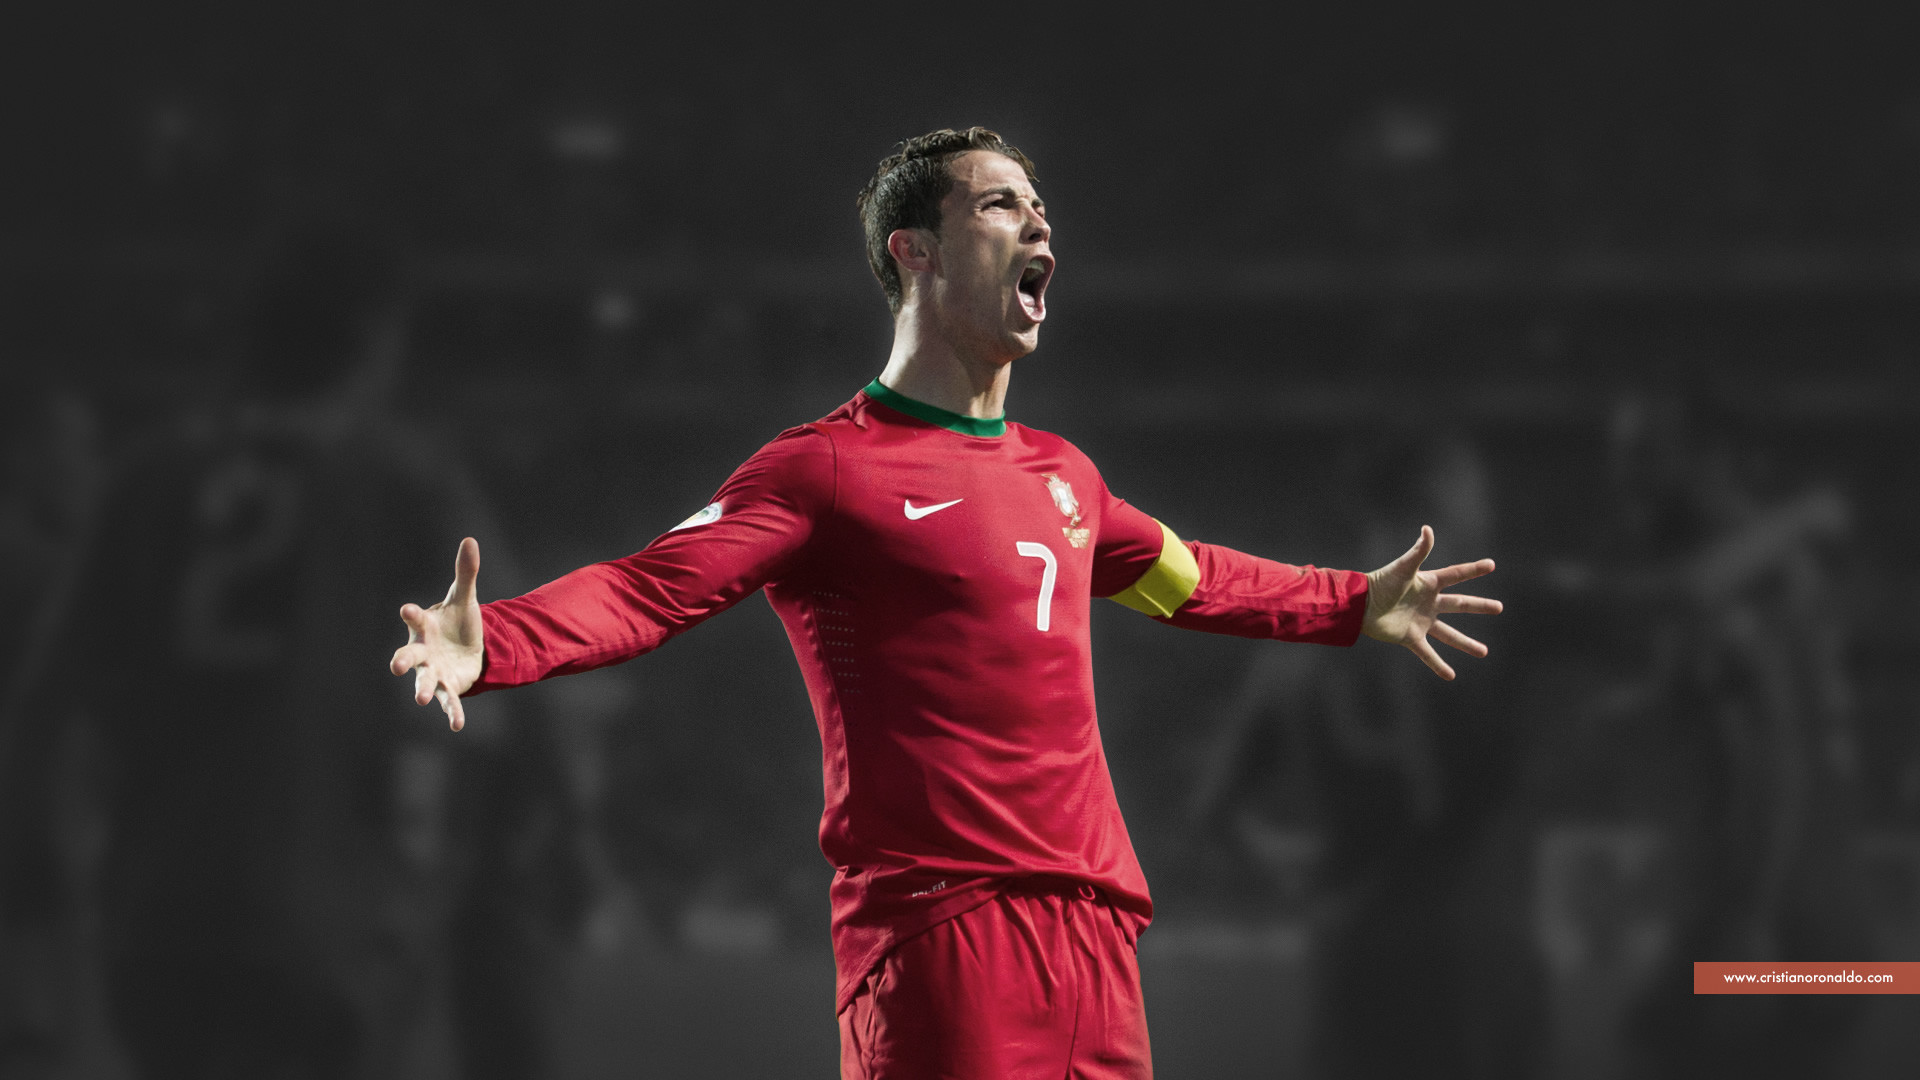 1920x1080 Cristiano Ronaldo Screaming Wallpaper